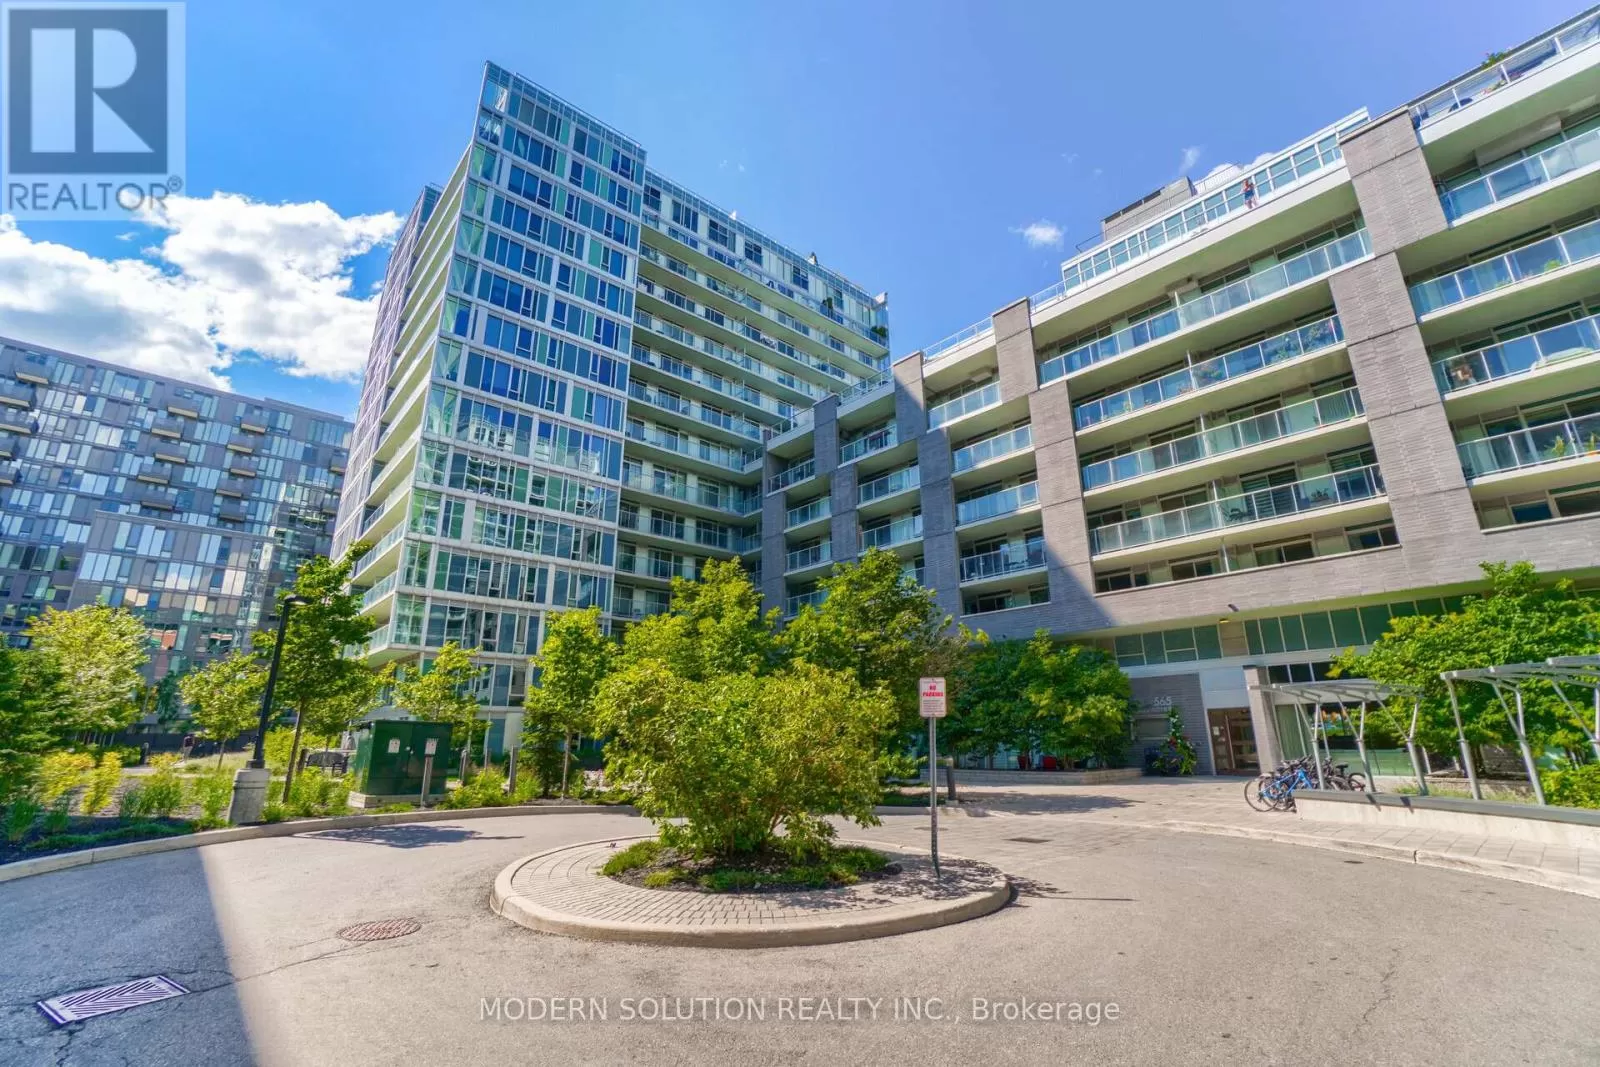 Apartment for rent: E109 - 555 Wilson Avenue W, Toronto, Ontario M3H 5Y6